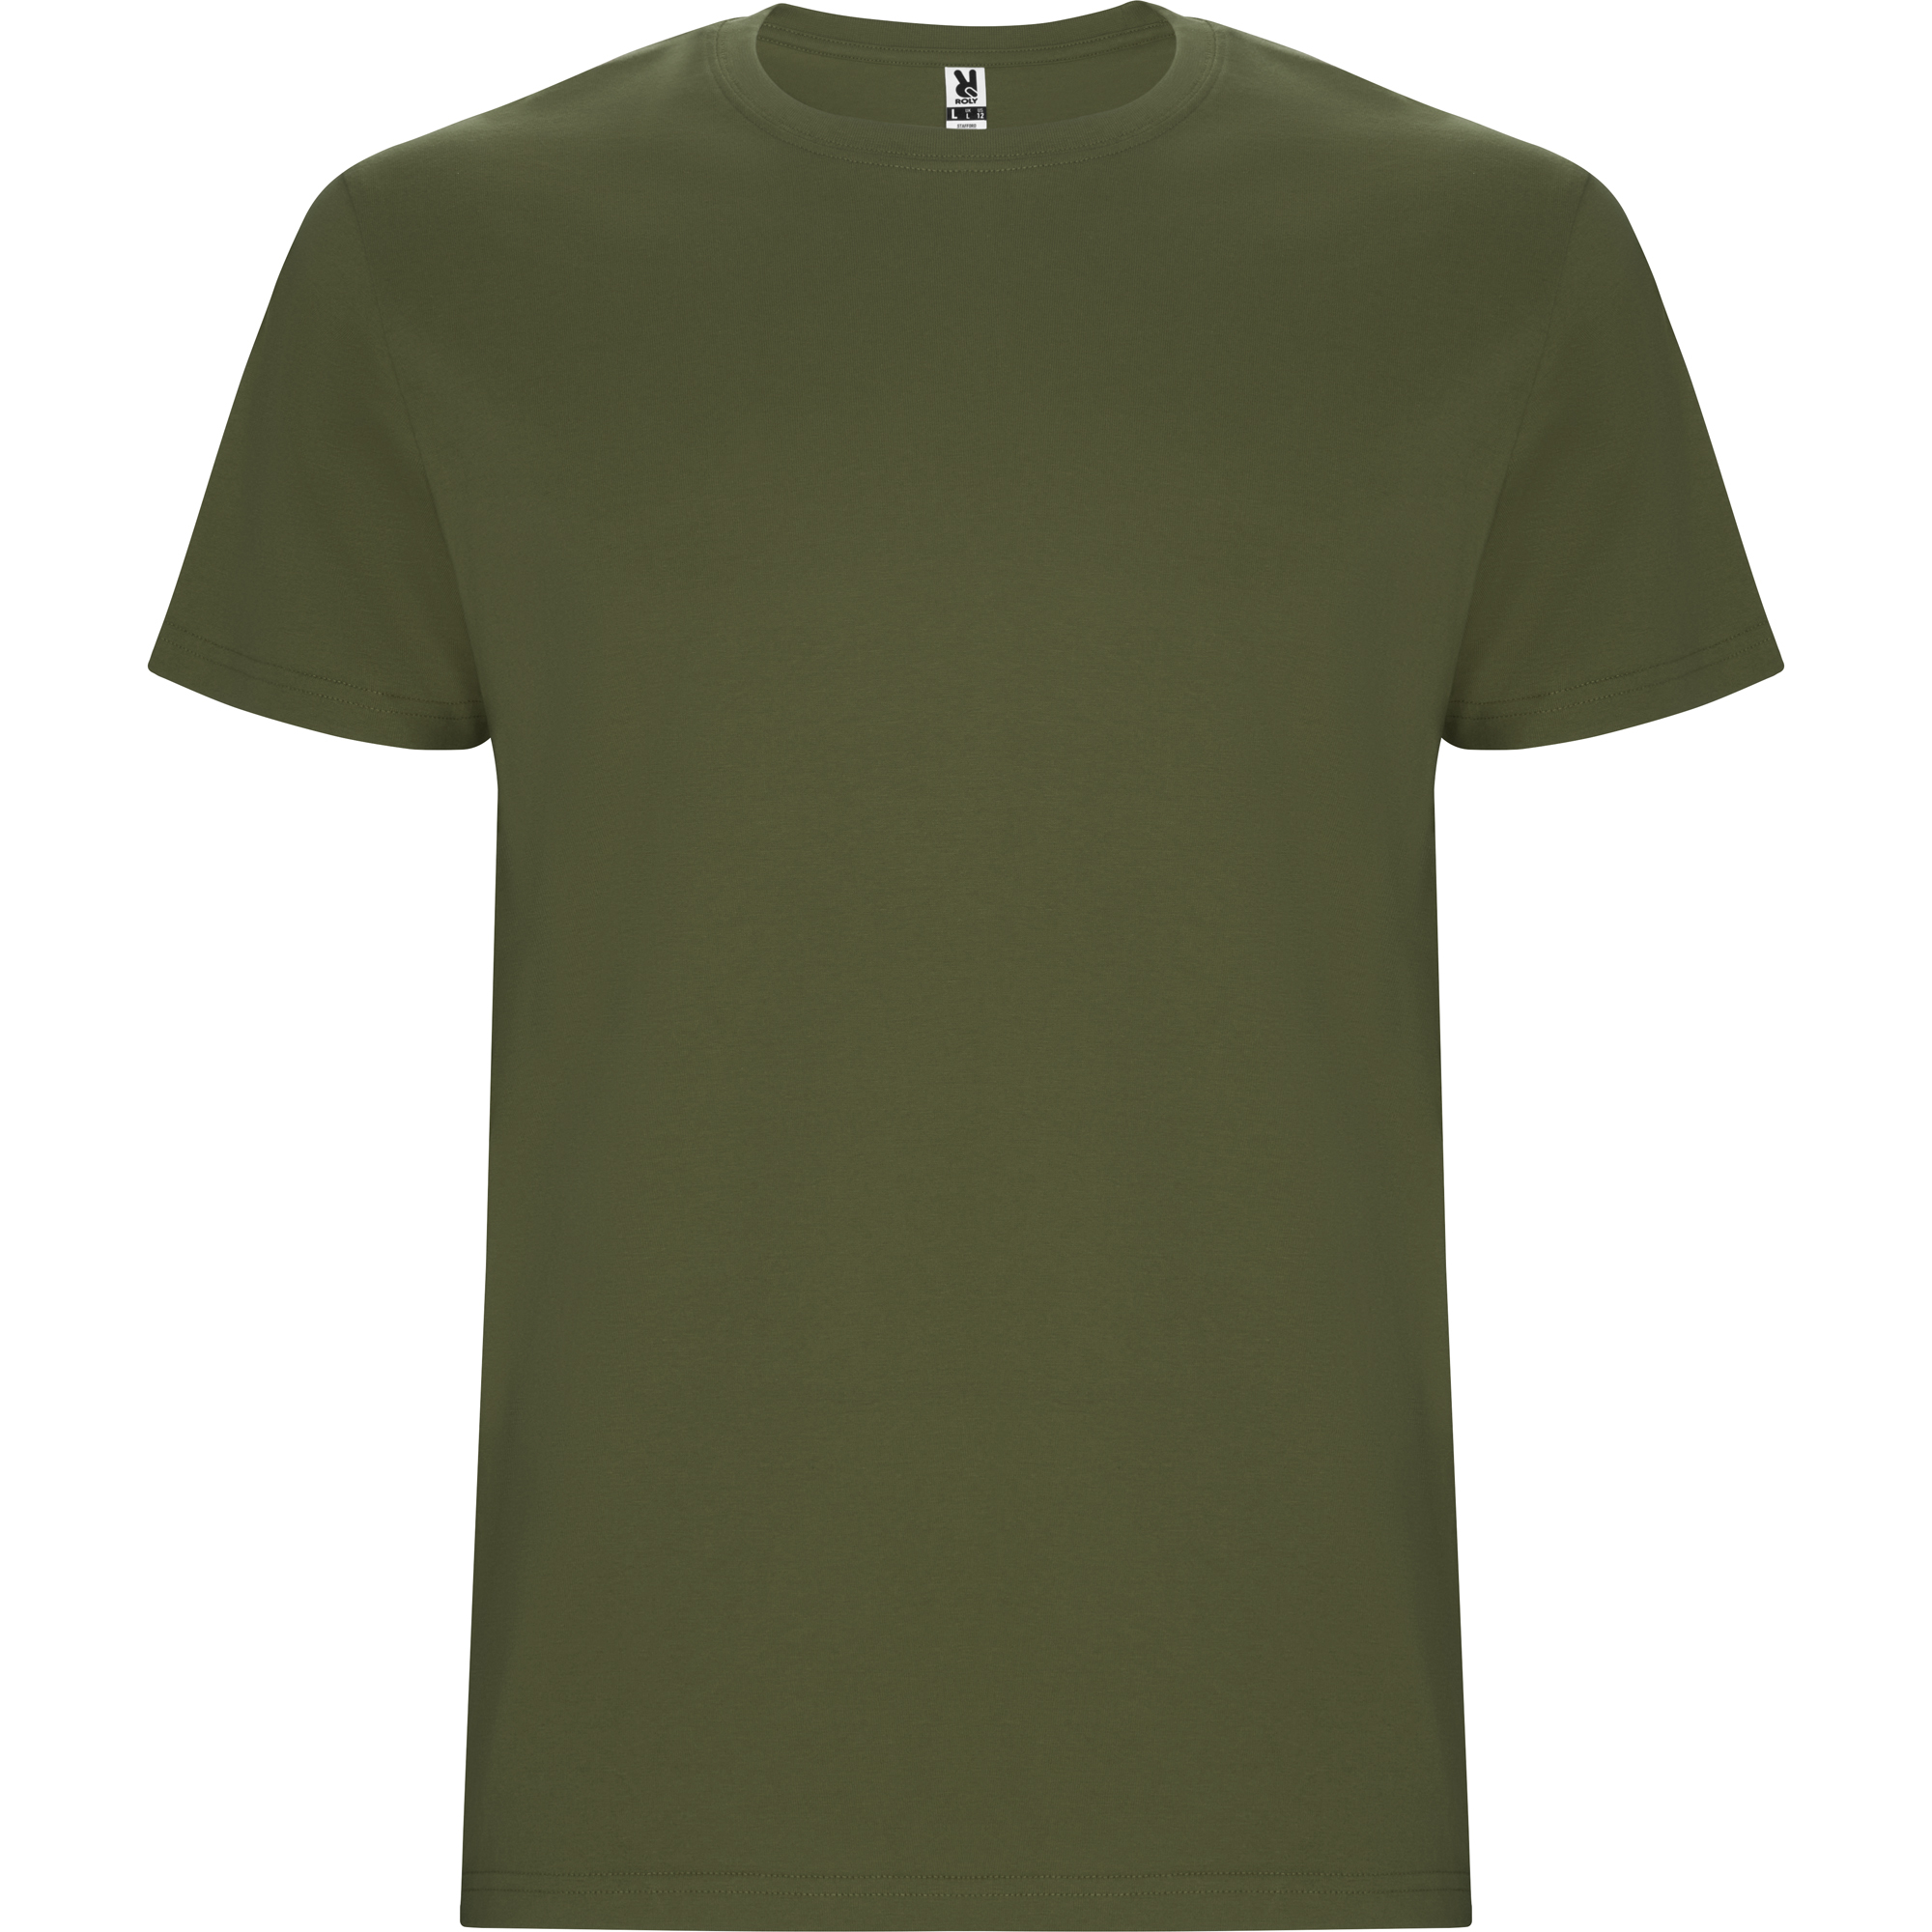 r6681-roly-stafford-t-shirt-tubolare-verde-militare.jpg